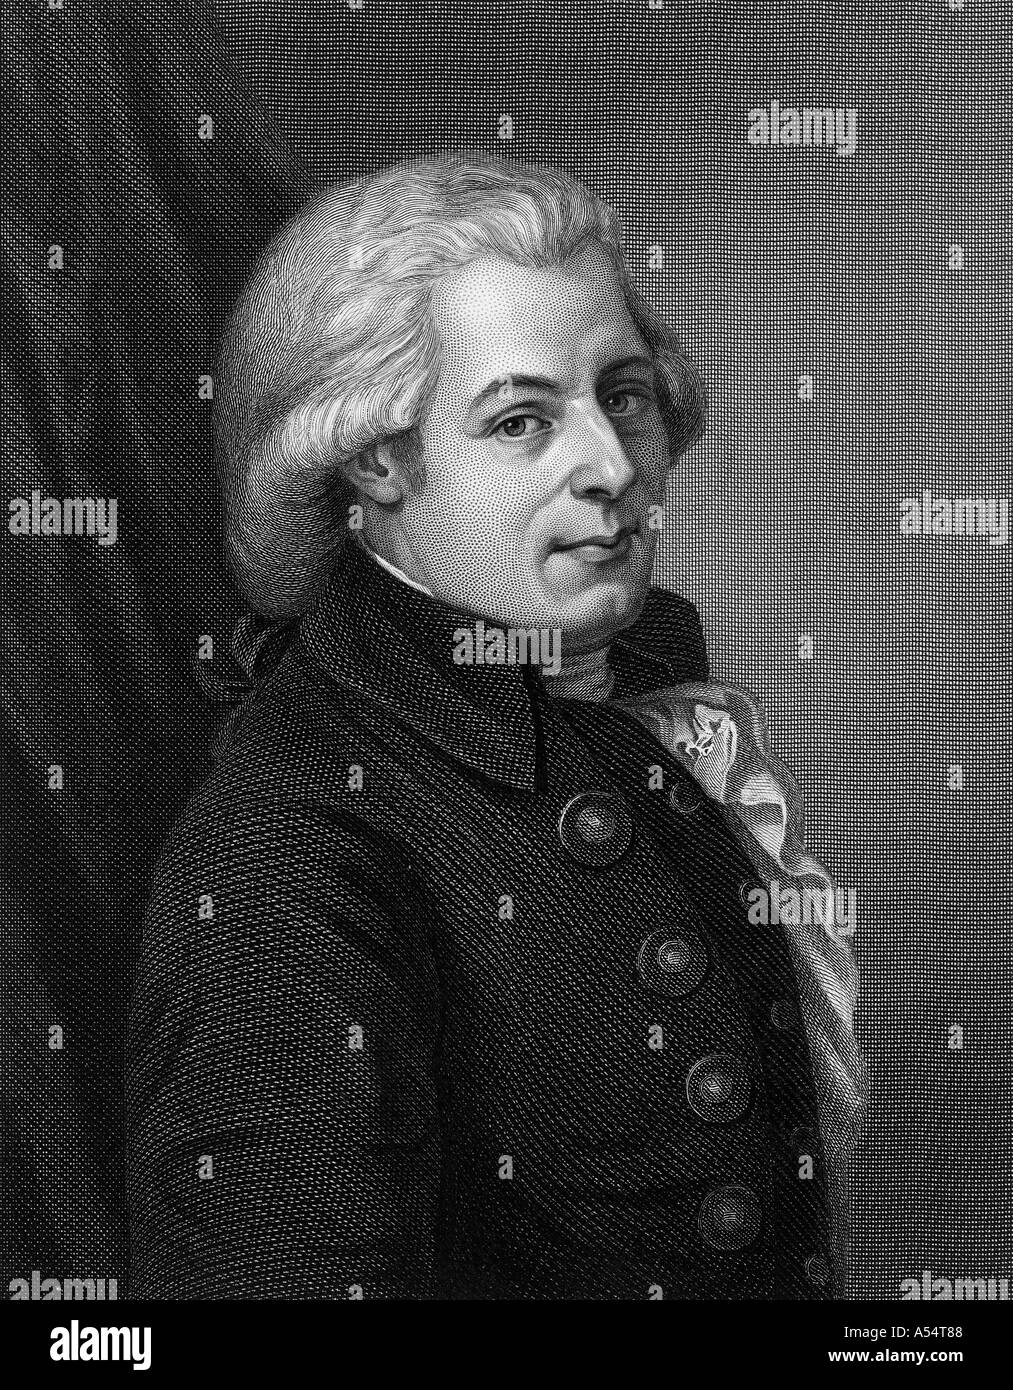 WOLFGANG Amadeus MOZART compositore austriaco 1756 1791 Foto Stock